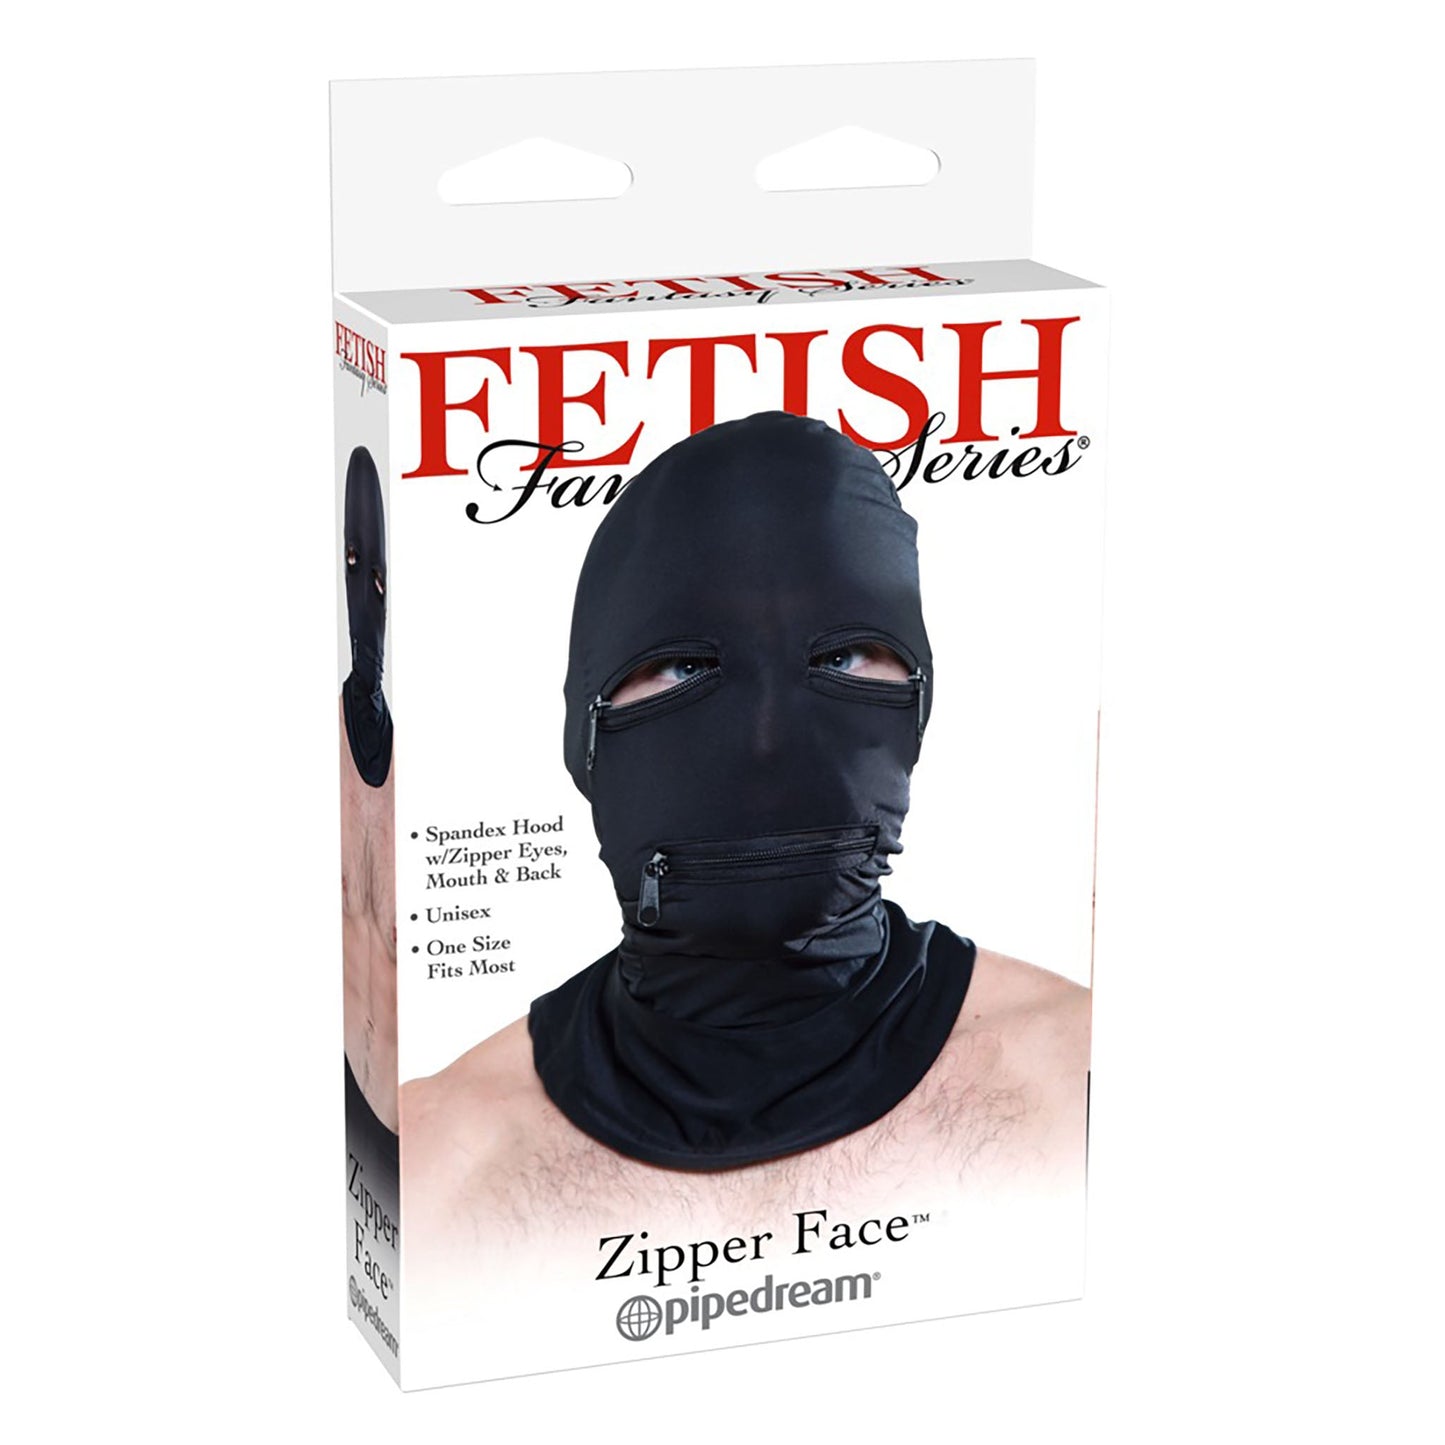 Zipper Face Hood, schwarze Kopfmaske in Verpackung